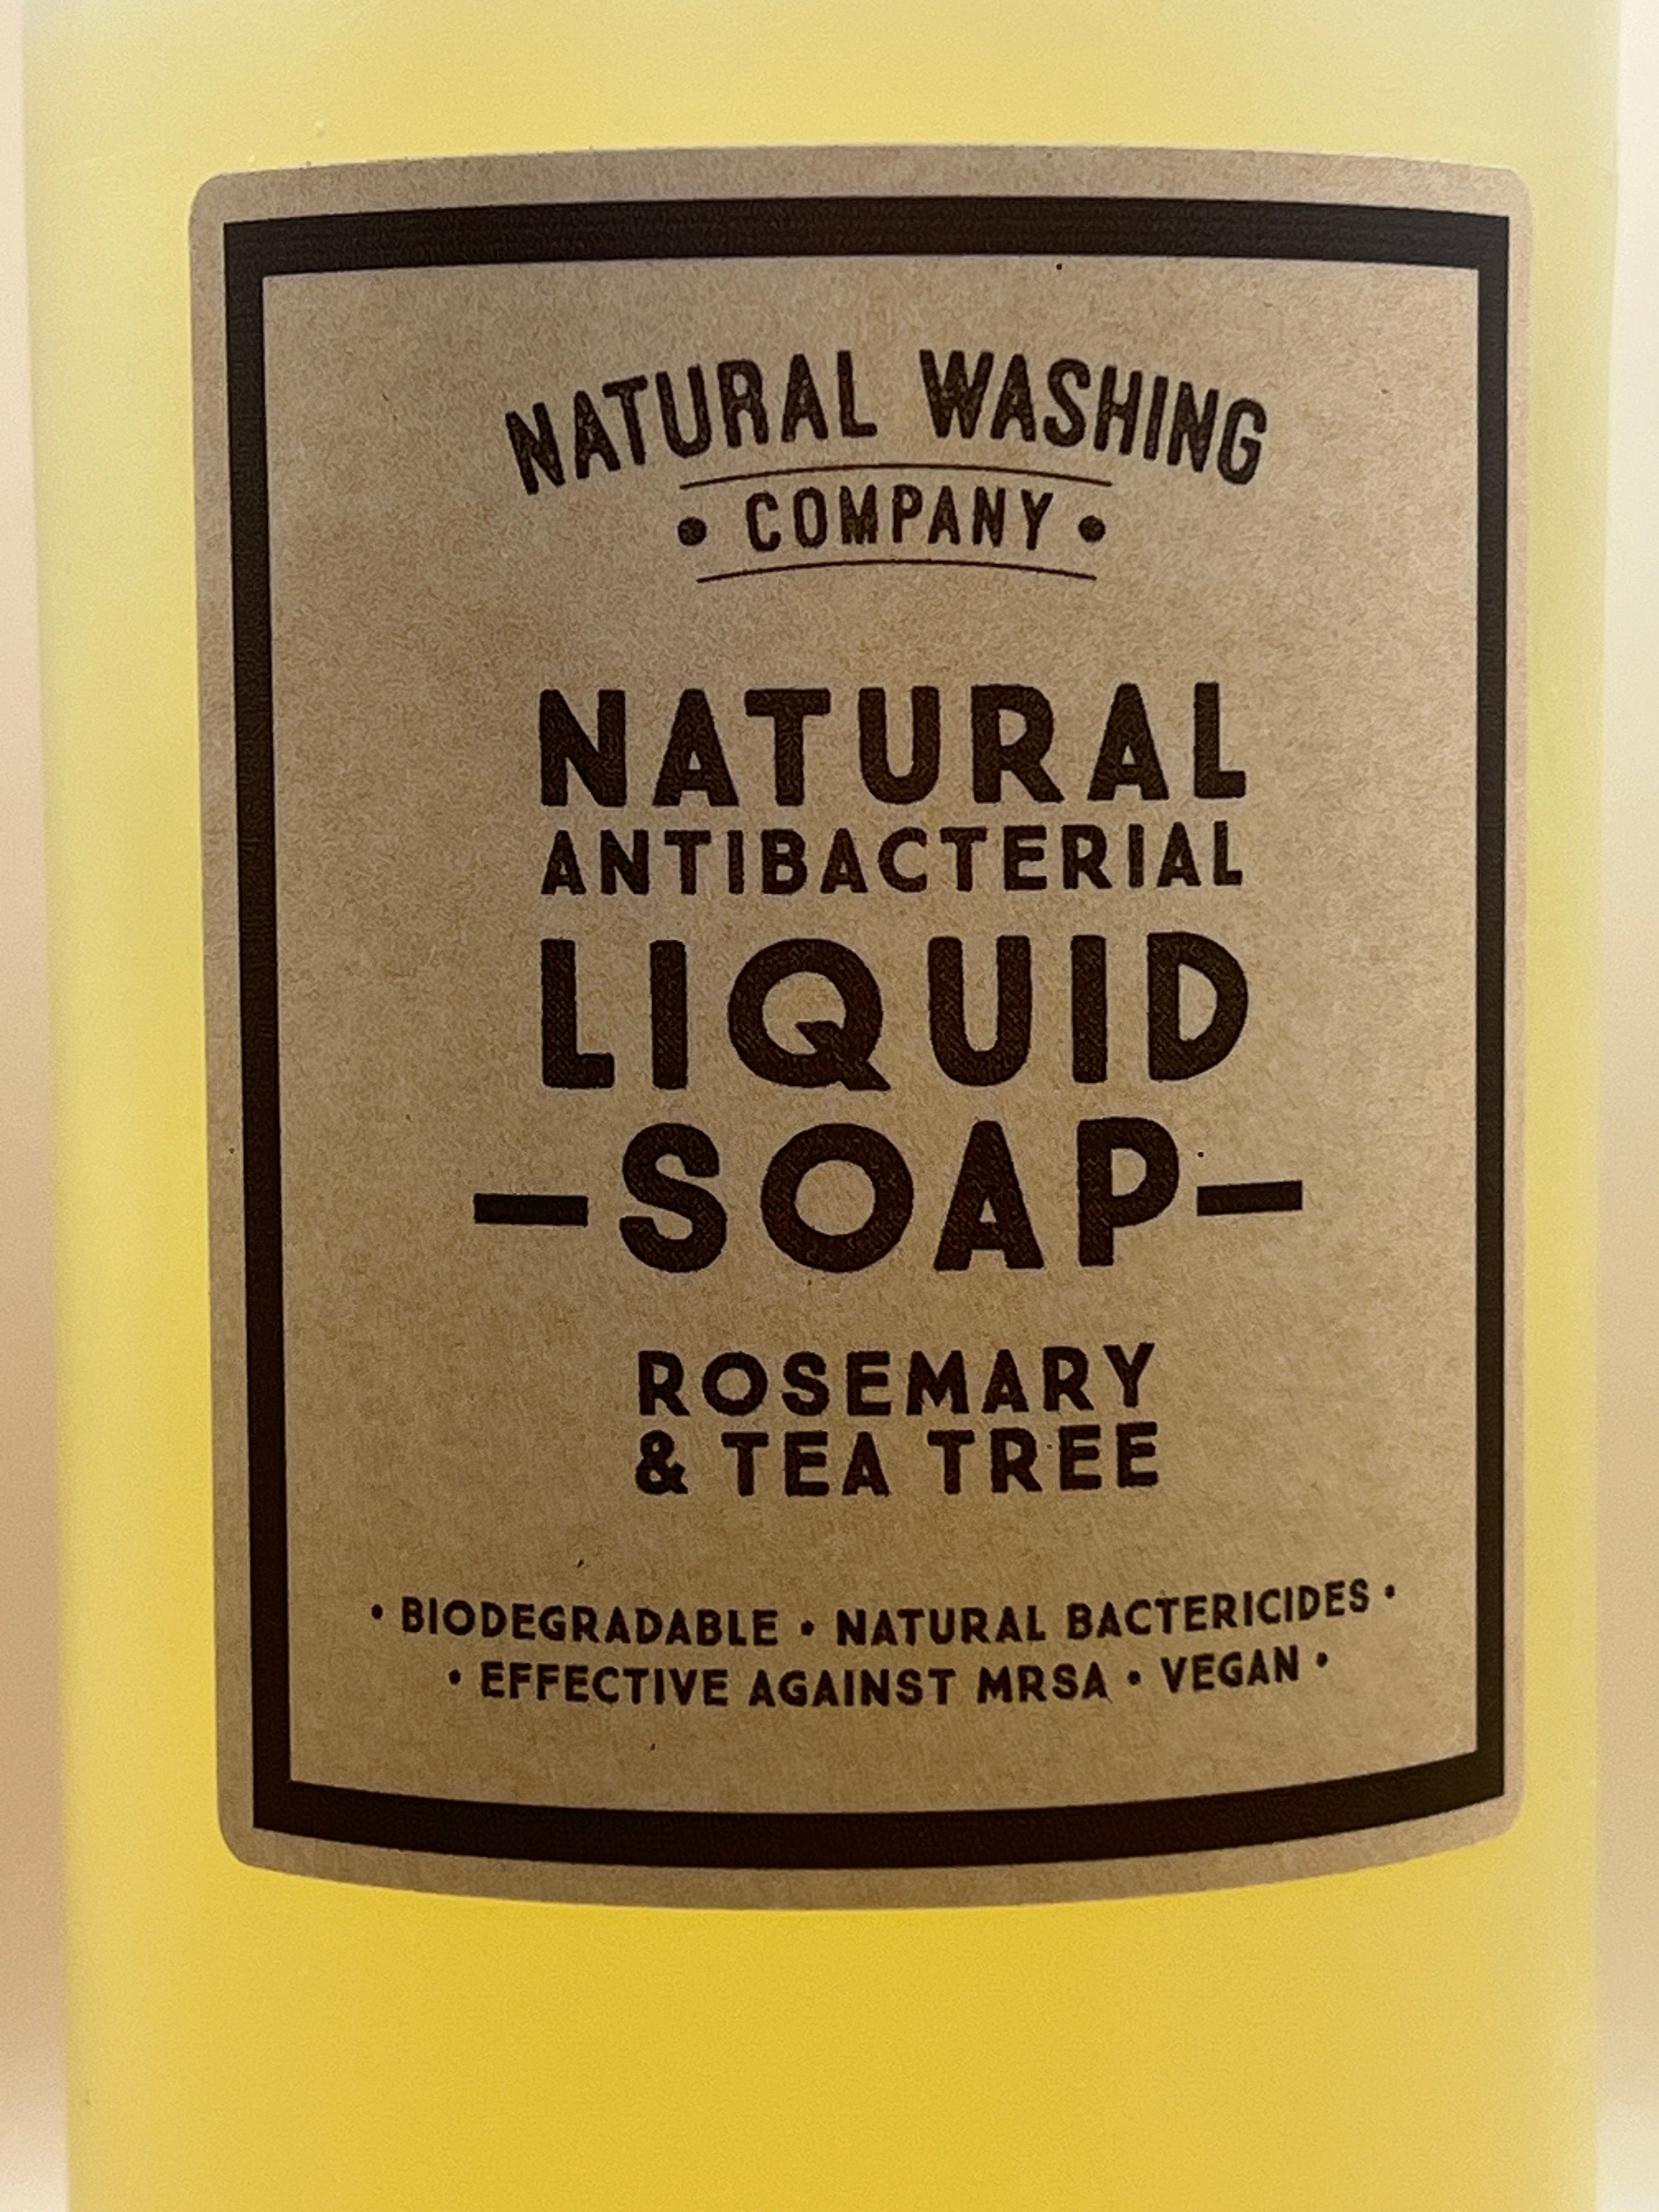 1 litre of Natural Antibacterial Liquid Soap - Rosemary & Tea Tree